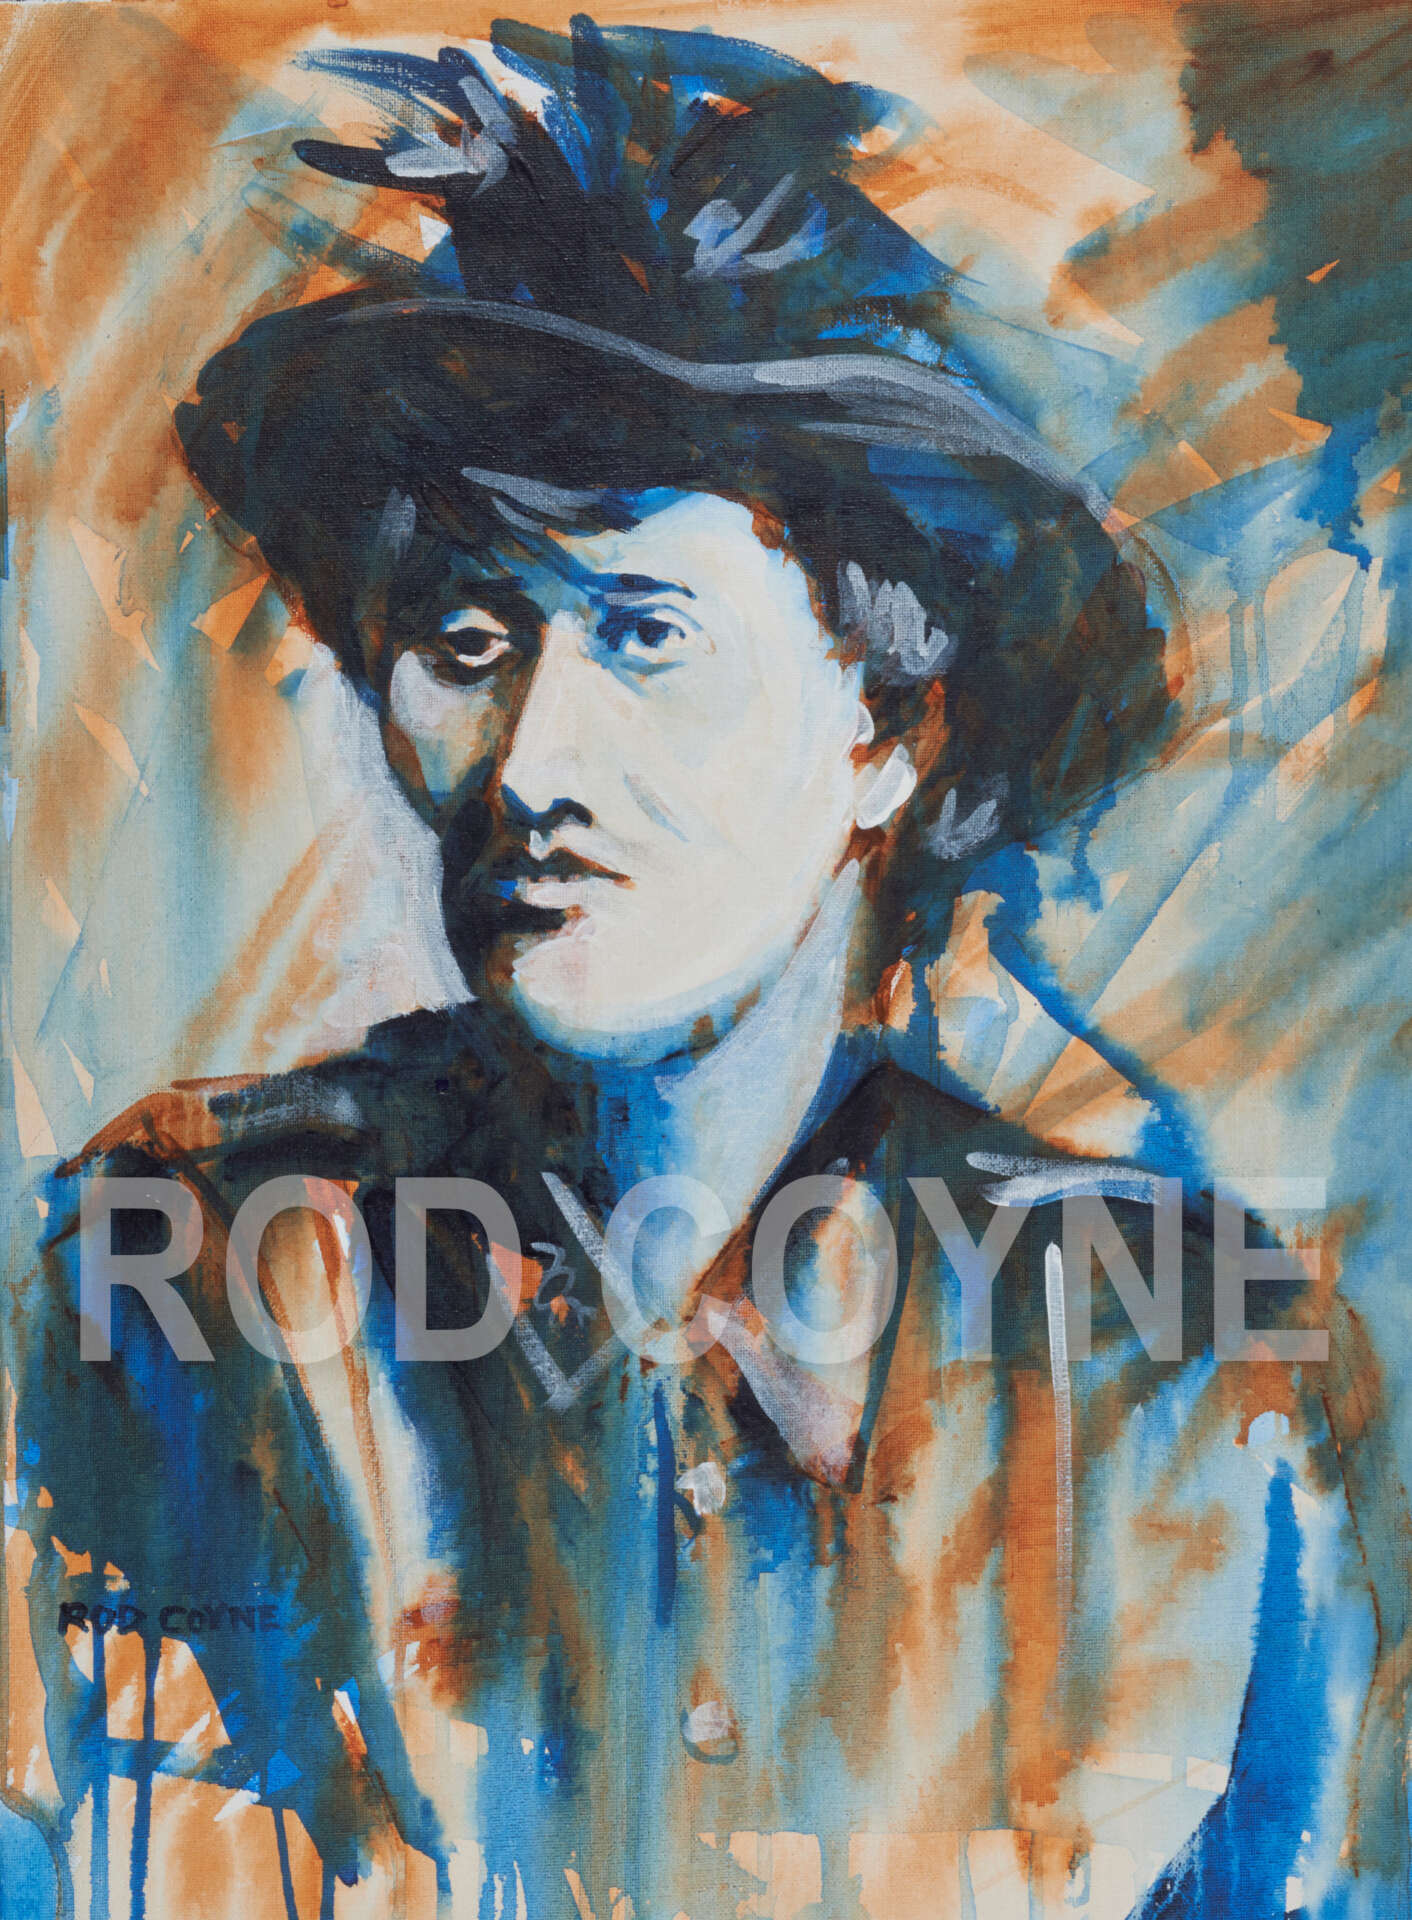 artist rod coyne's portrait "Countess Markievicz 1916" is shown here, watermarked.